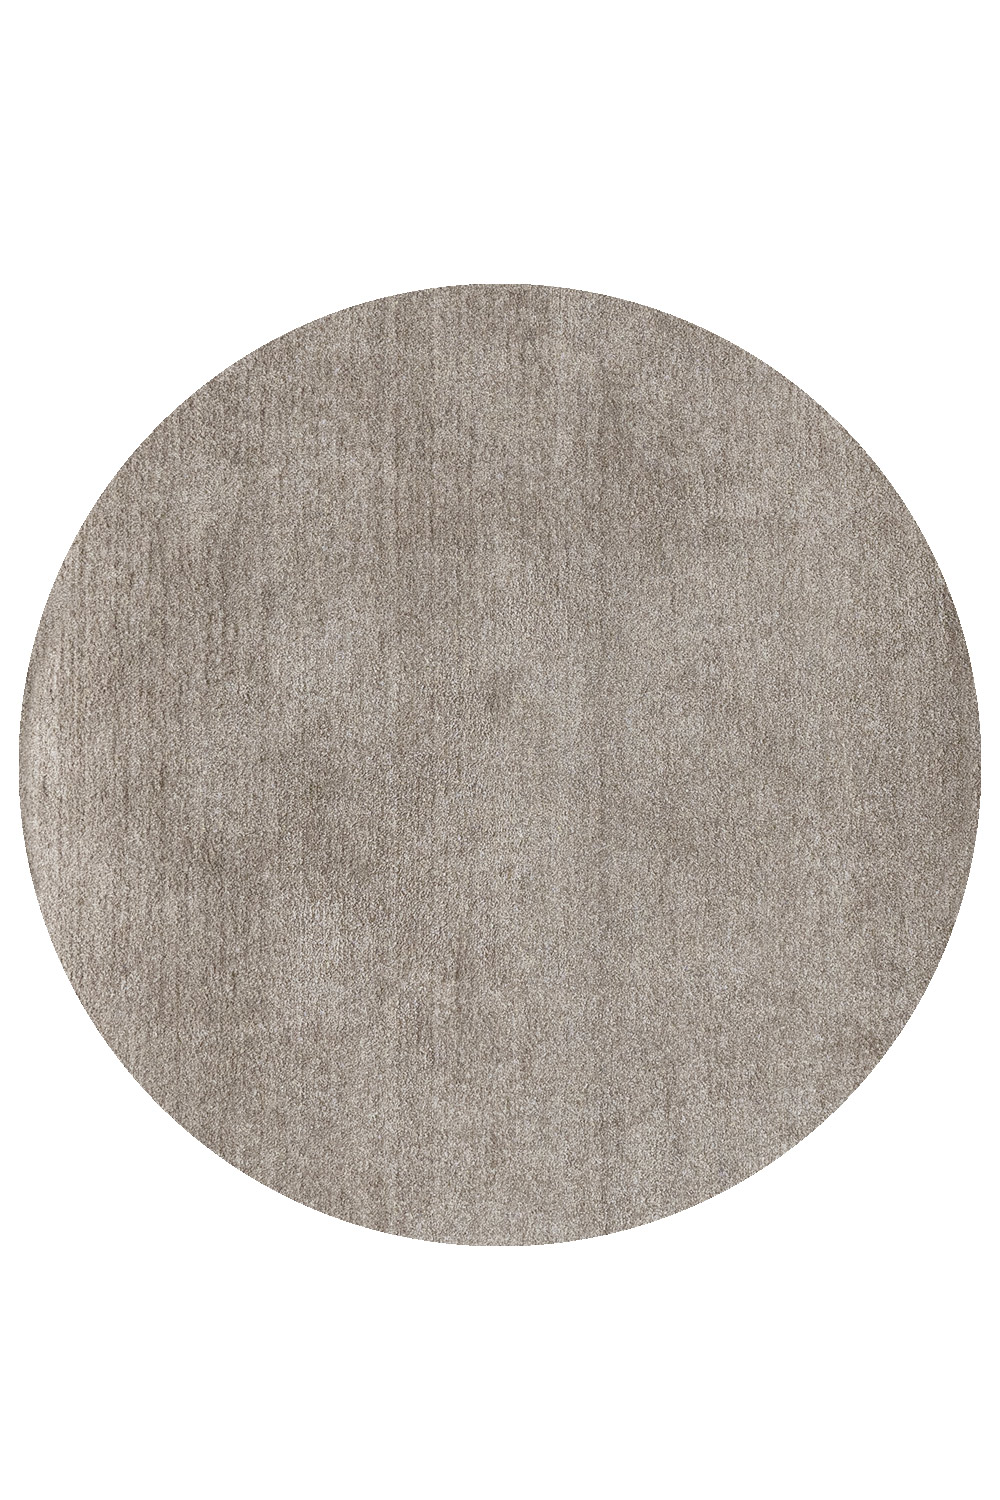 Kusový koberec Labrador 050 Beige - kruh Ø 120 cm